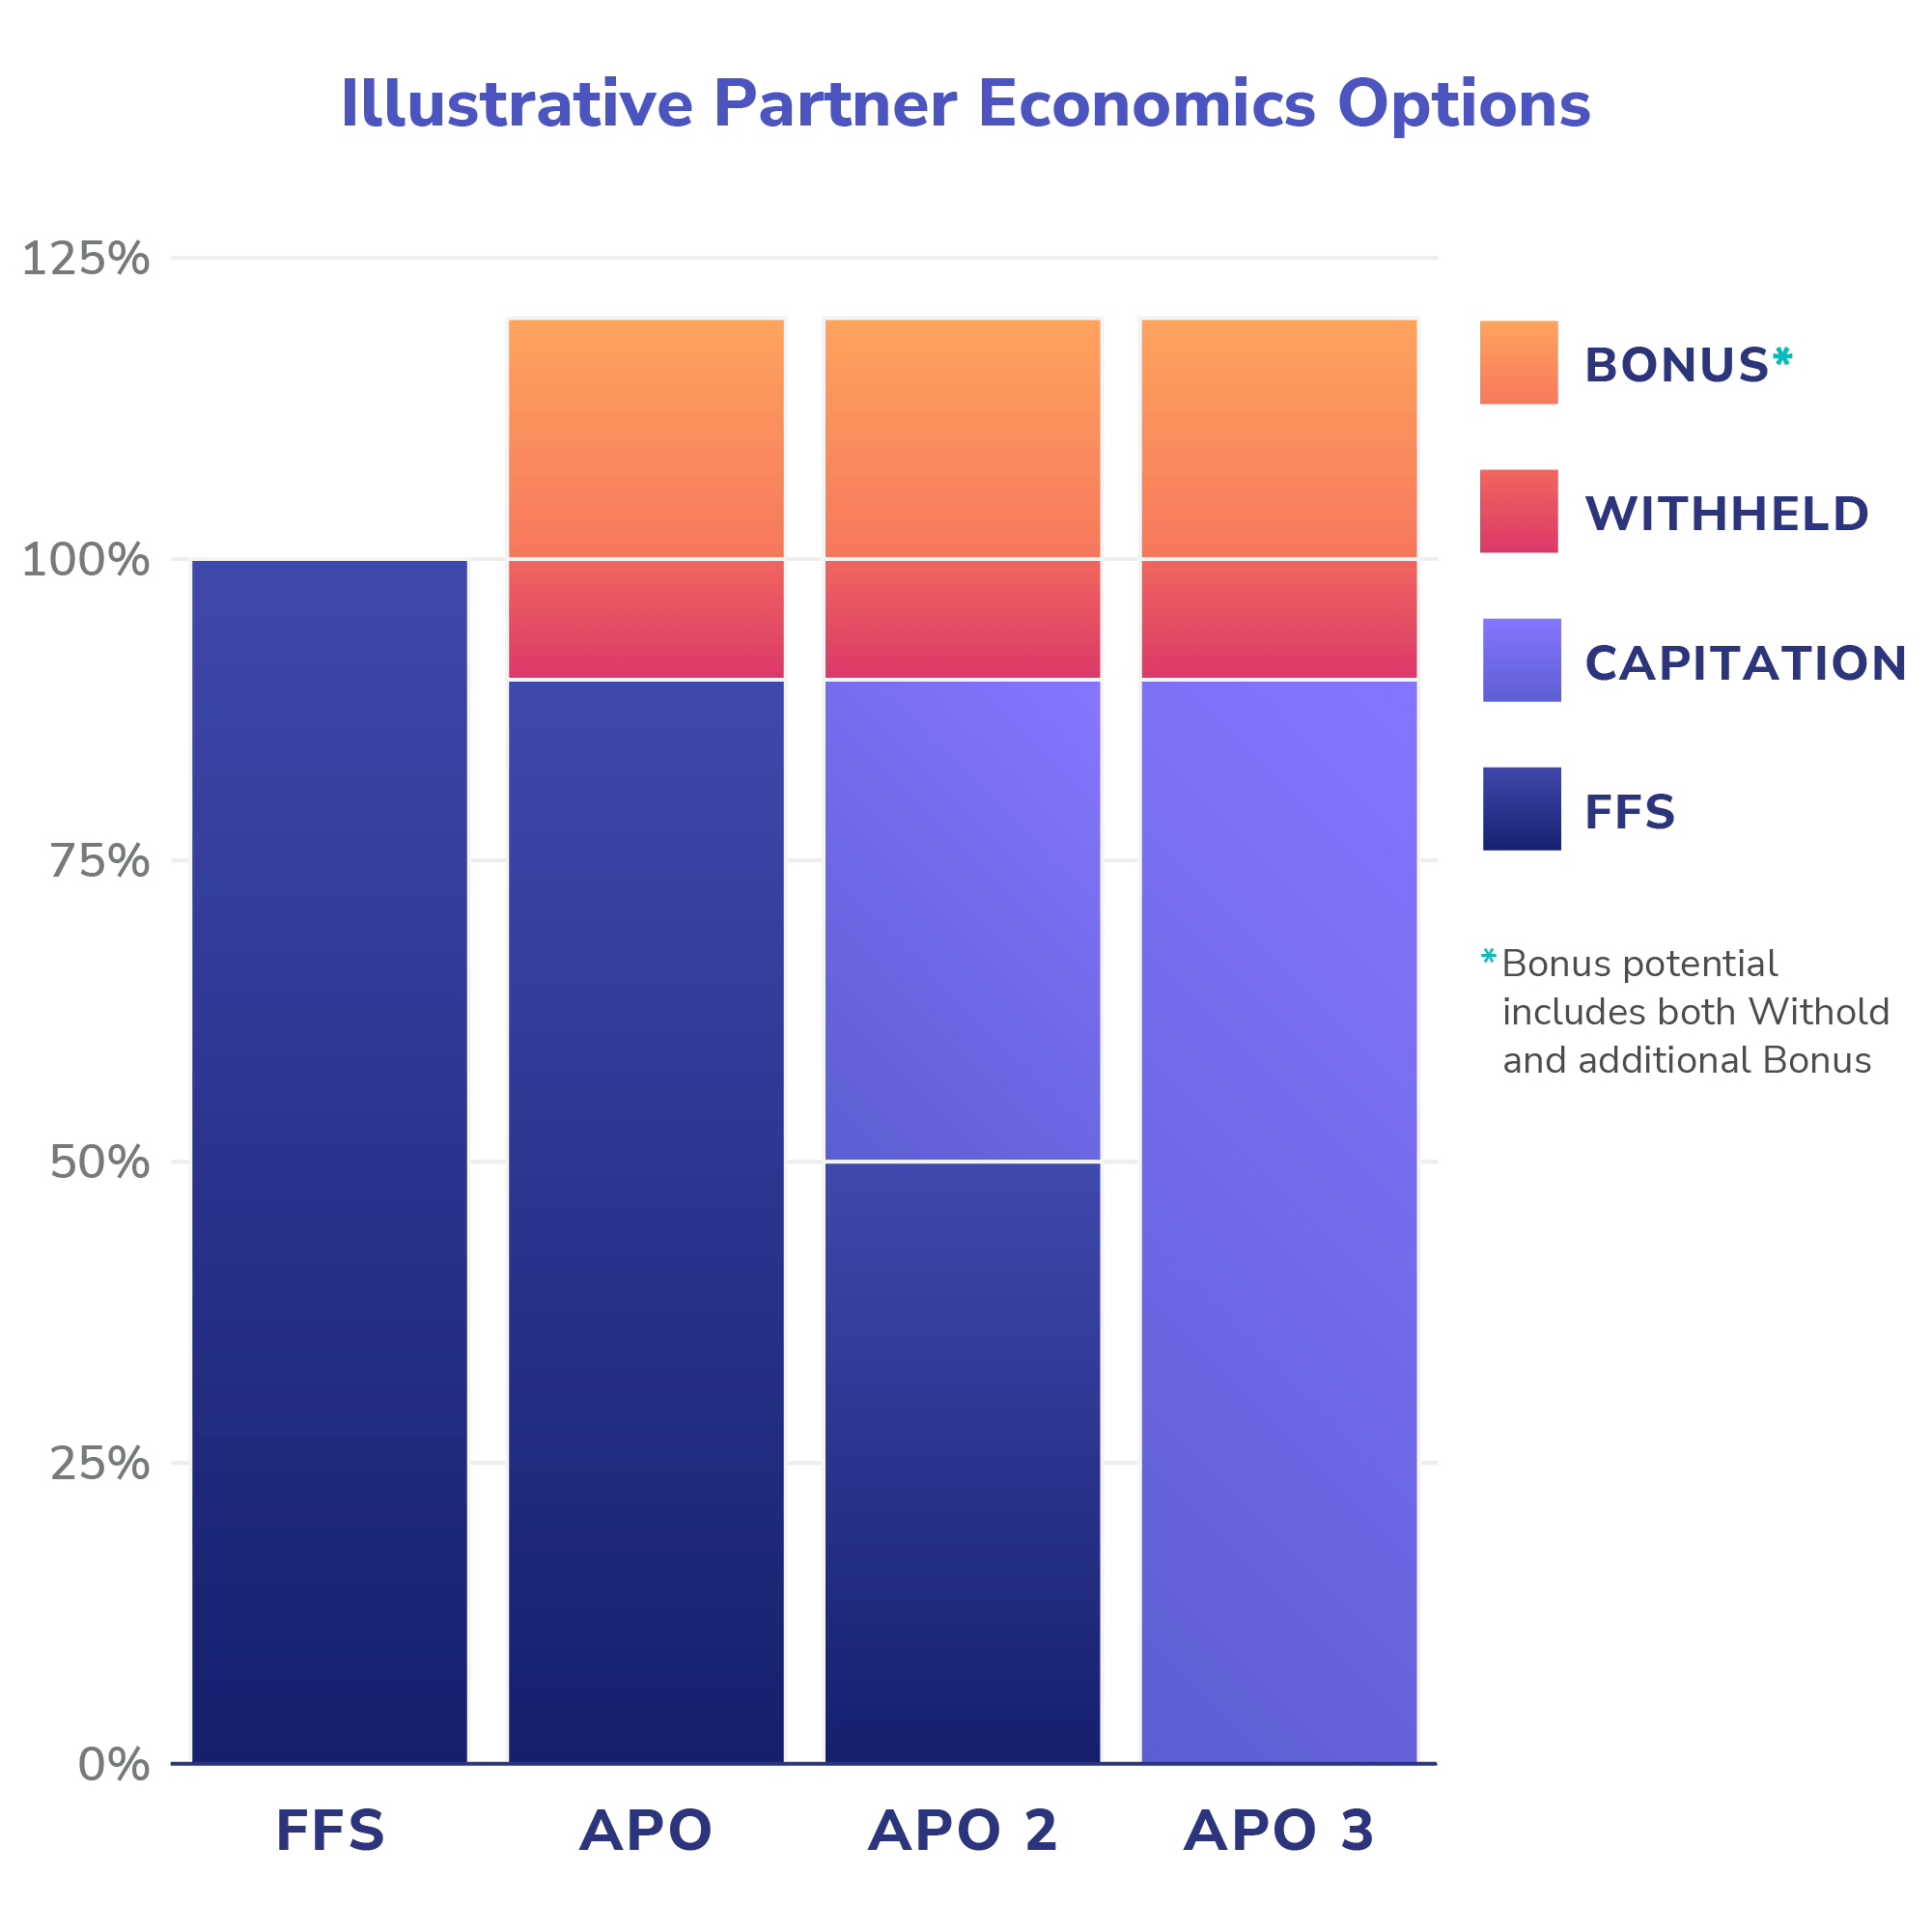 Illustrative Partner Economics Options